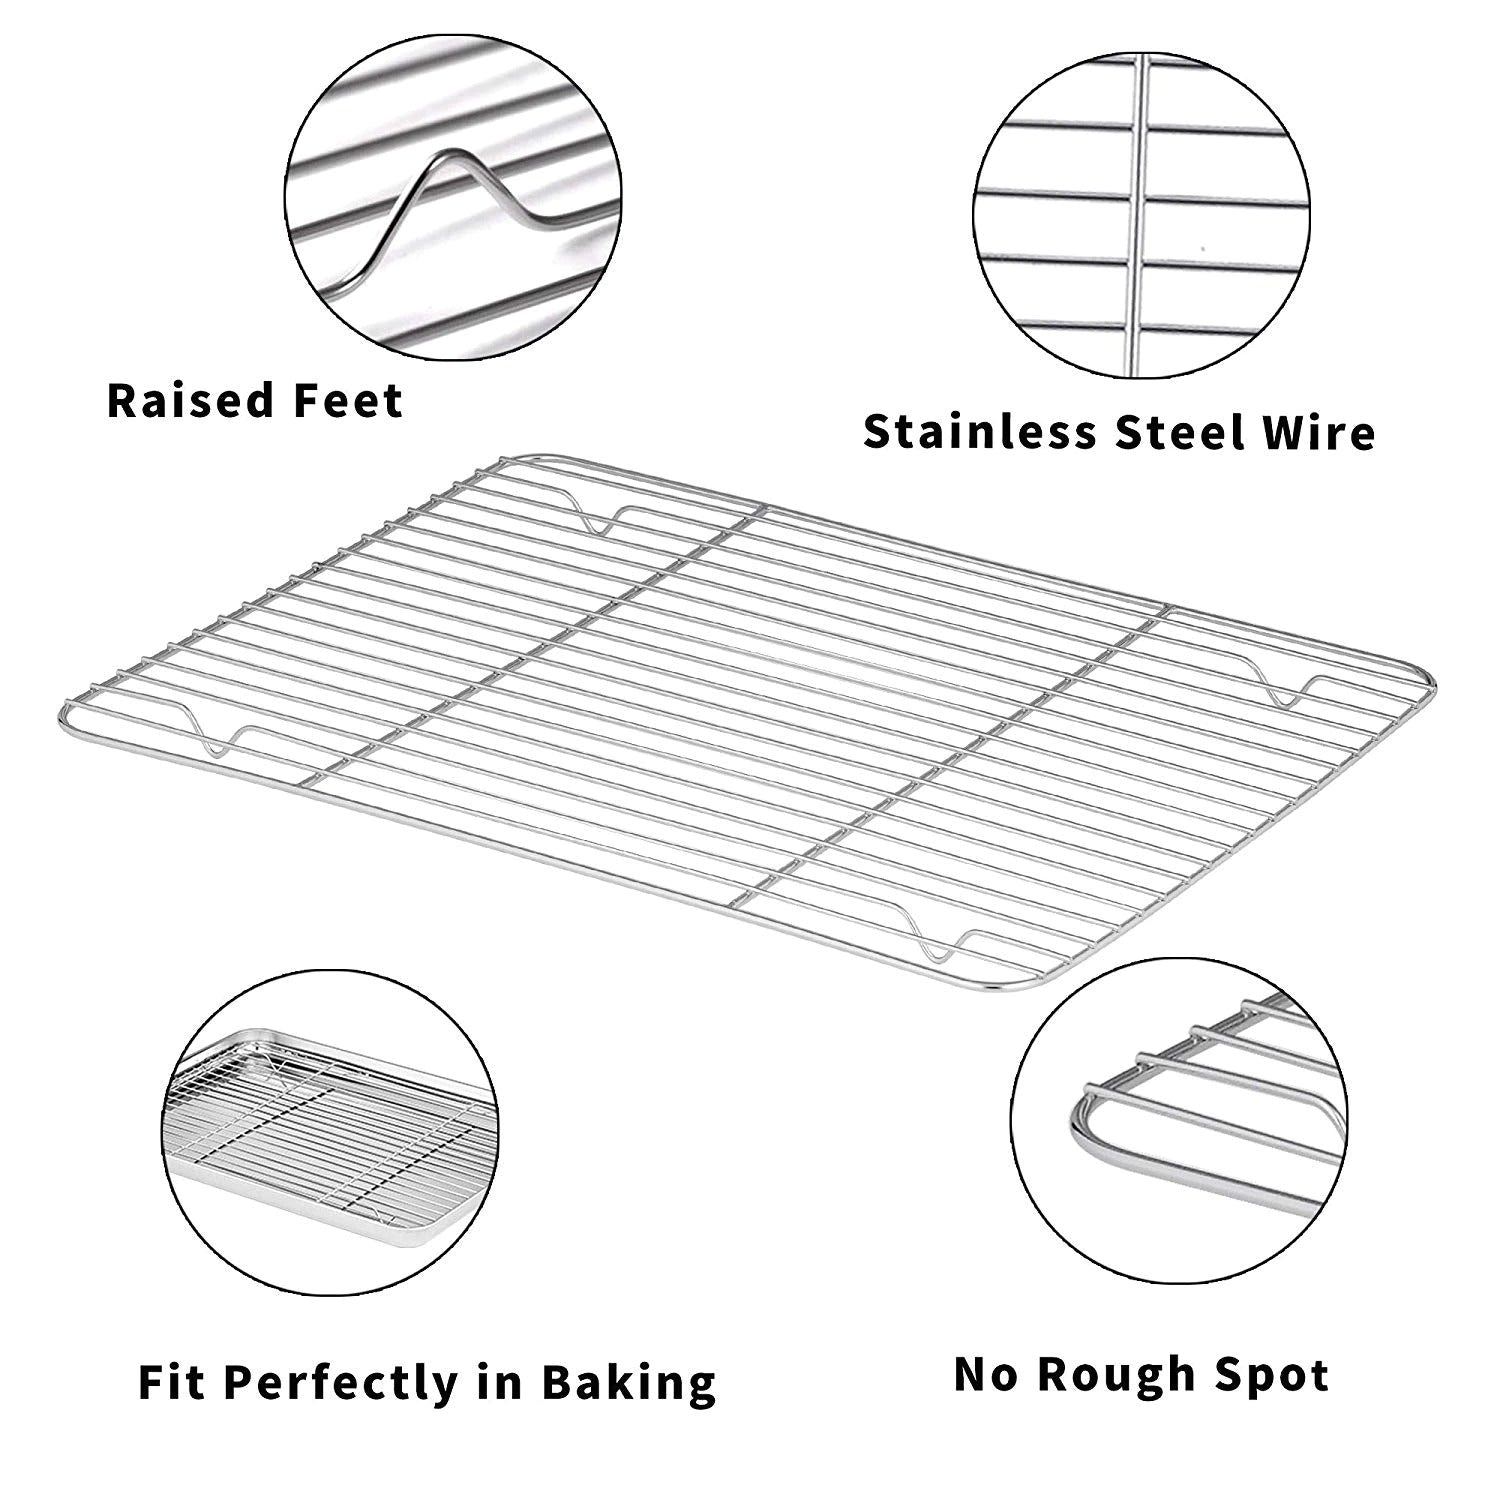 Velaze Baking Tray with Rack Set of 8(4 Racks),Cookie Baking Pans Stainless Steel Bakeware with Cooling Rack Set,Dishwasher Safe